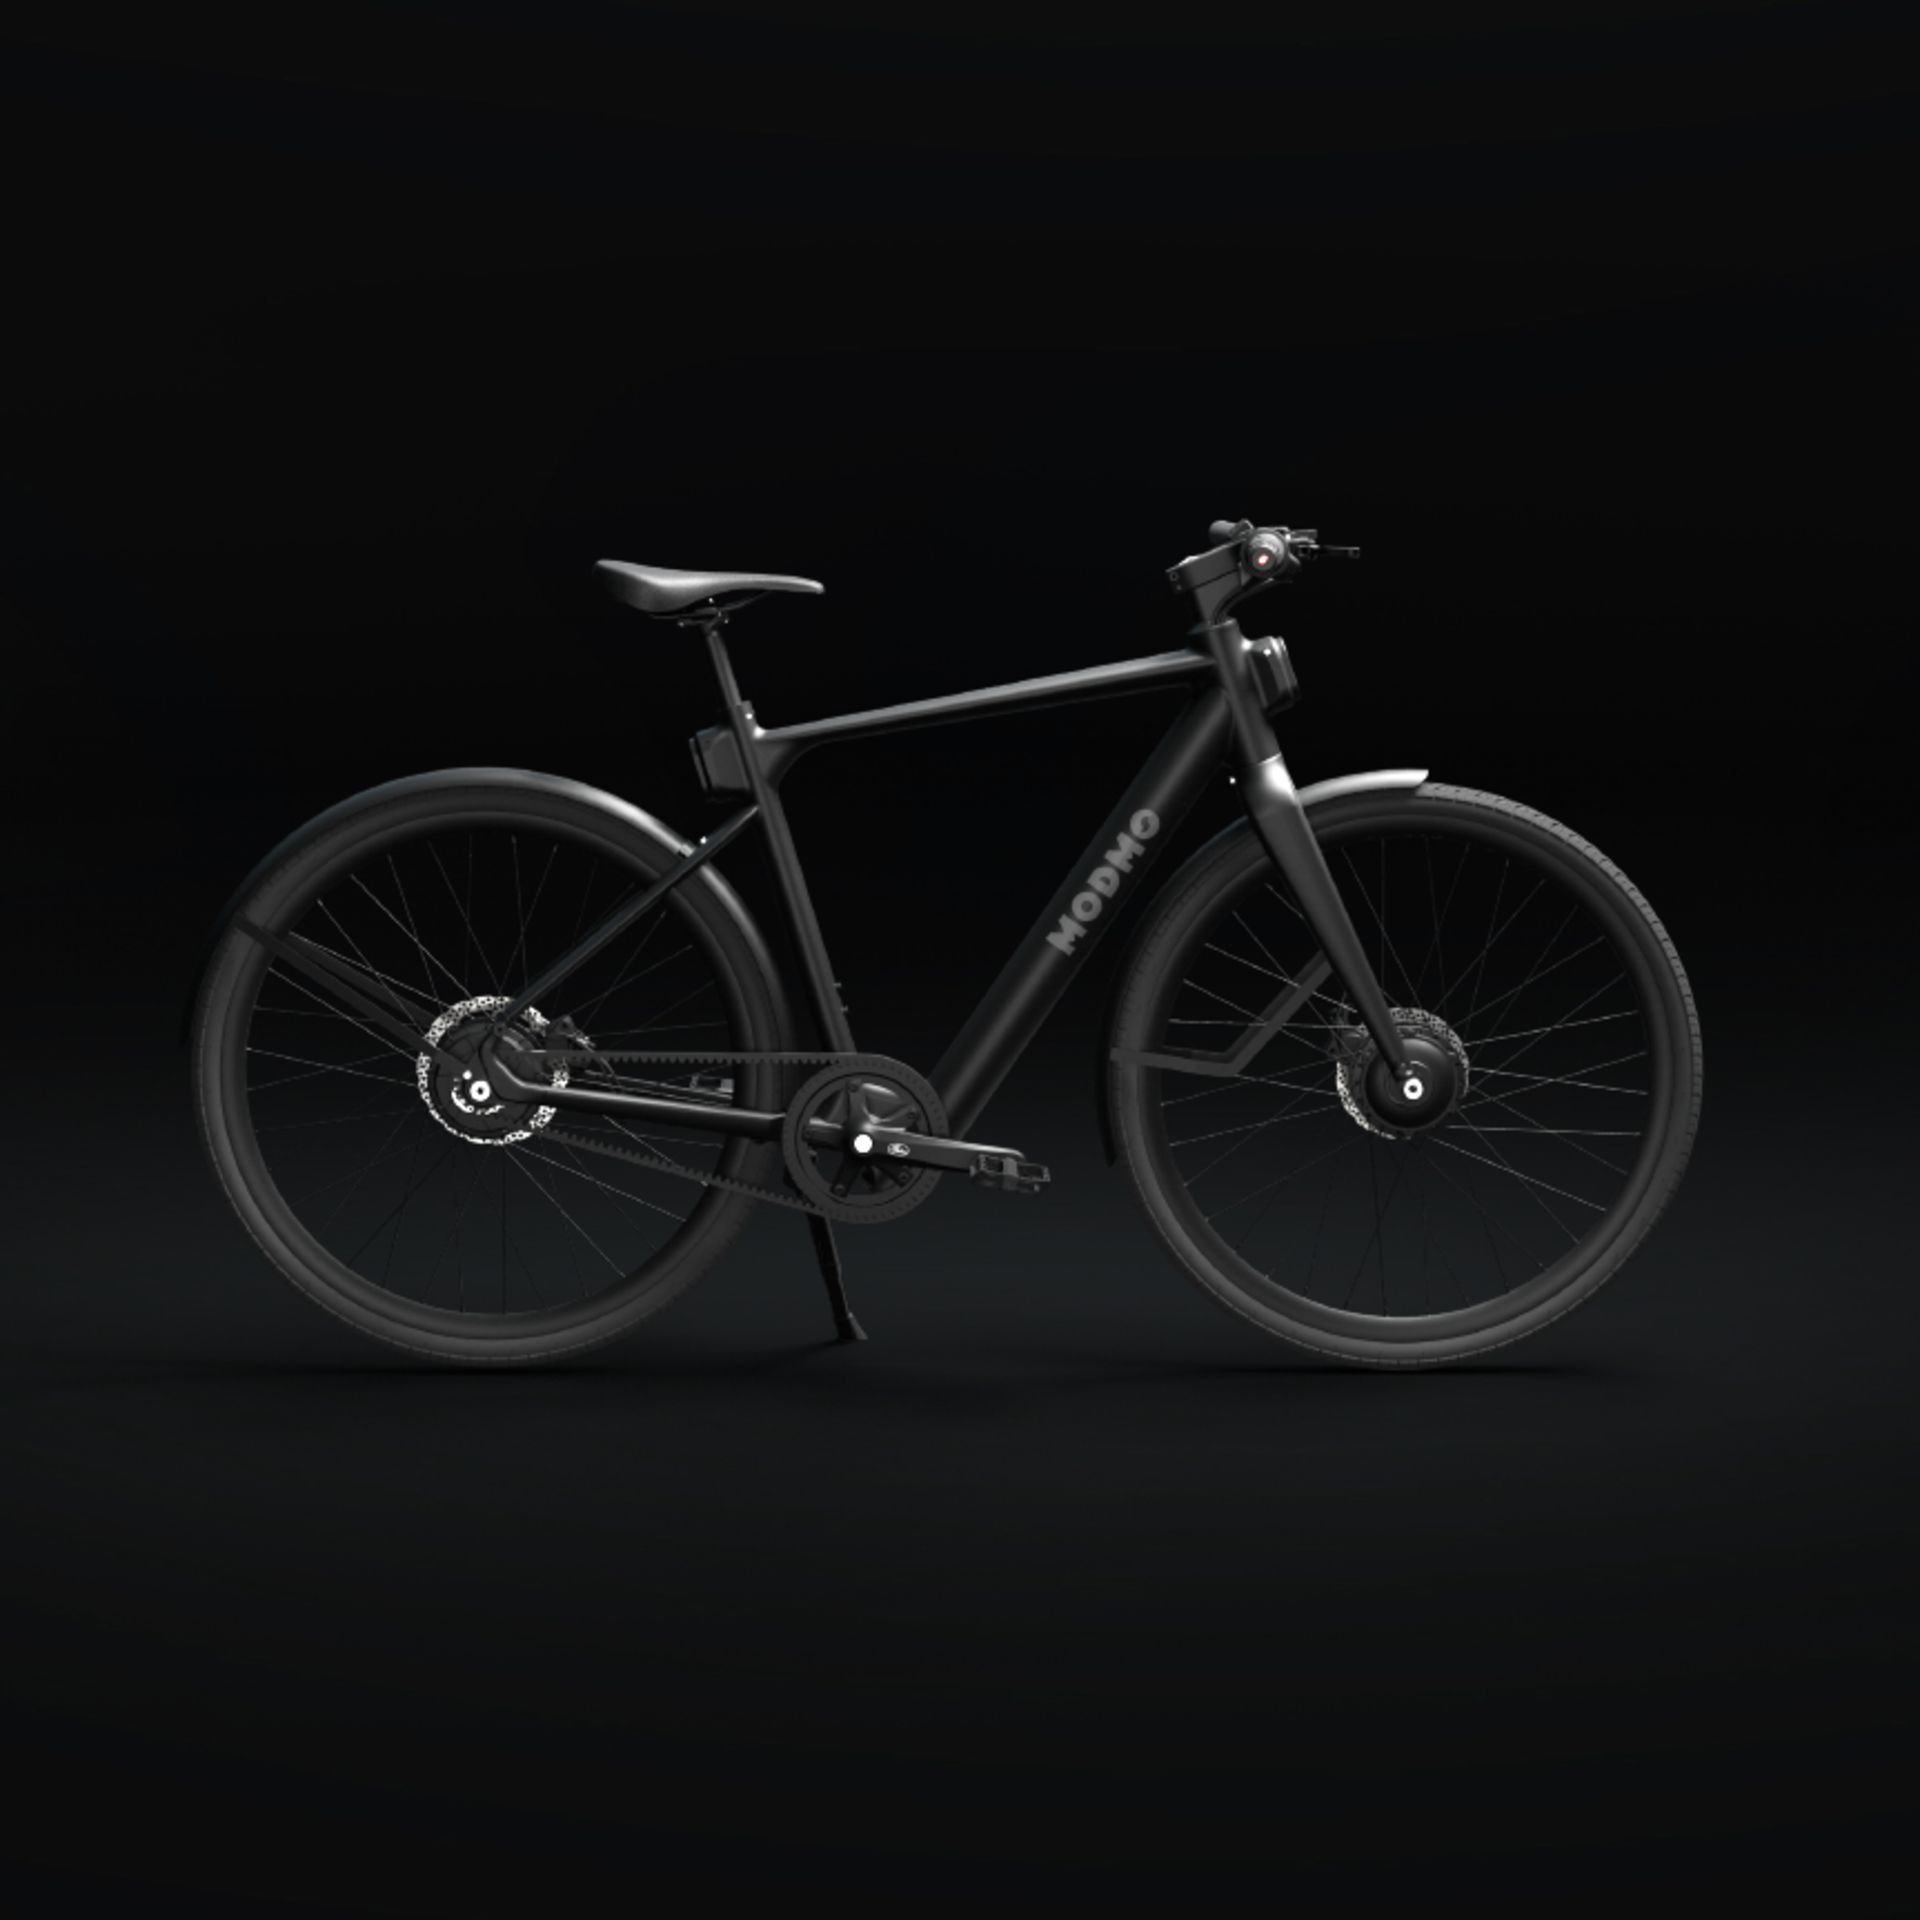 Modmo Saigon+ Electric Bicycle - RRP £2800 - Size S (Rider: 140-155cm) - Image 3 of 14